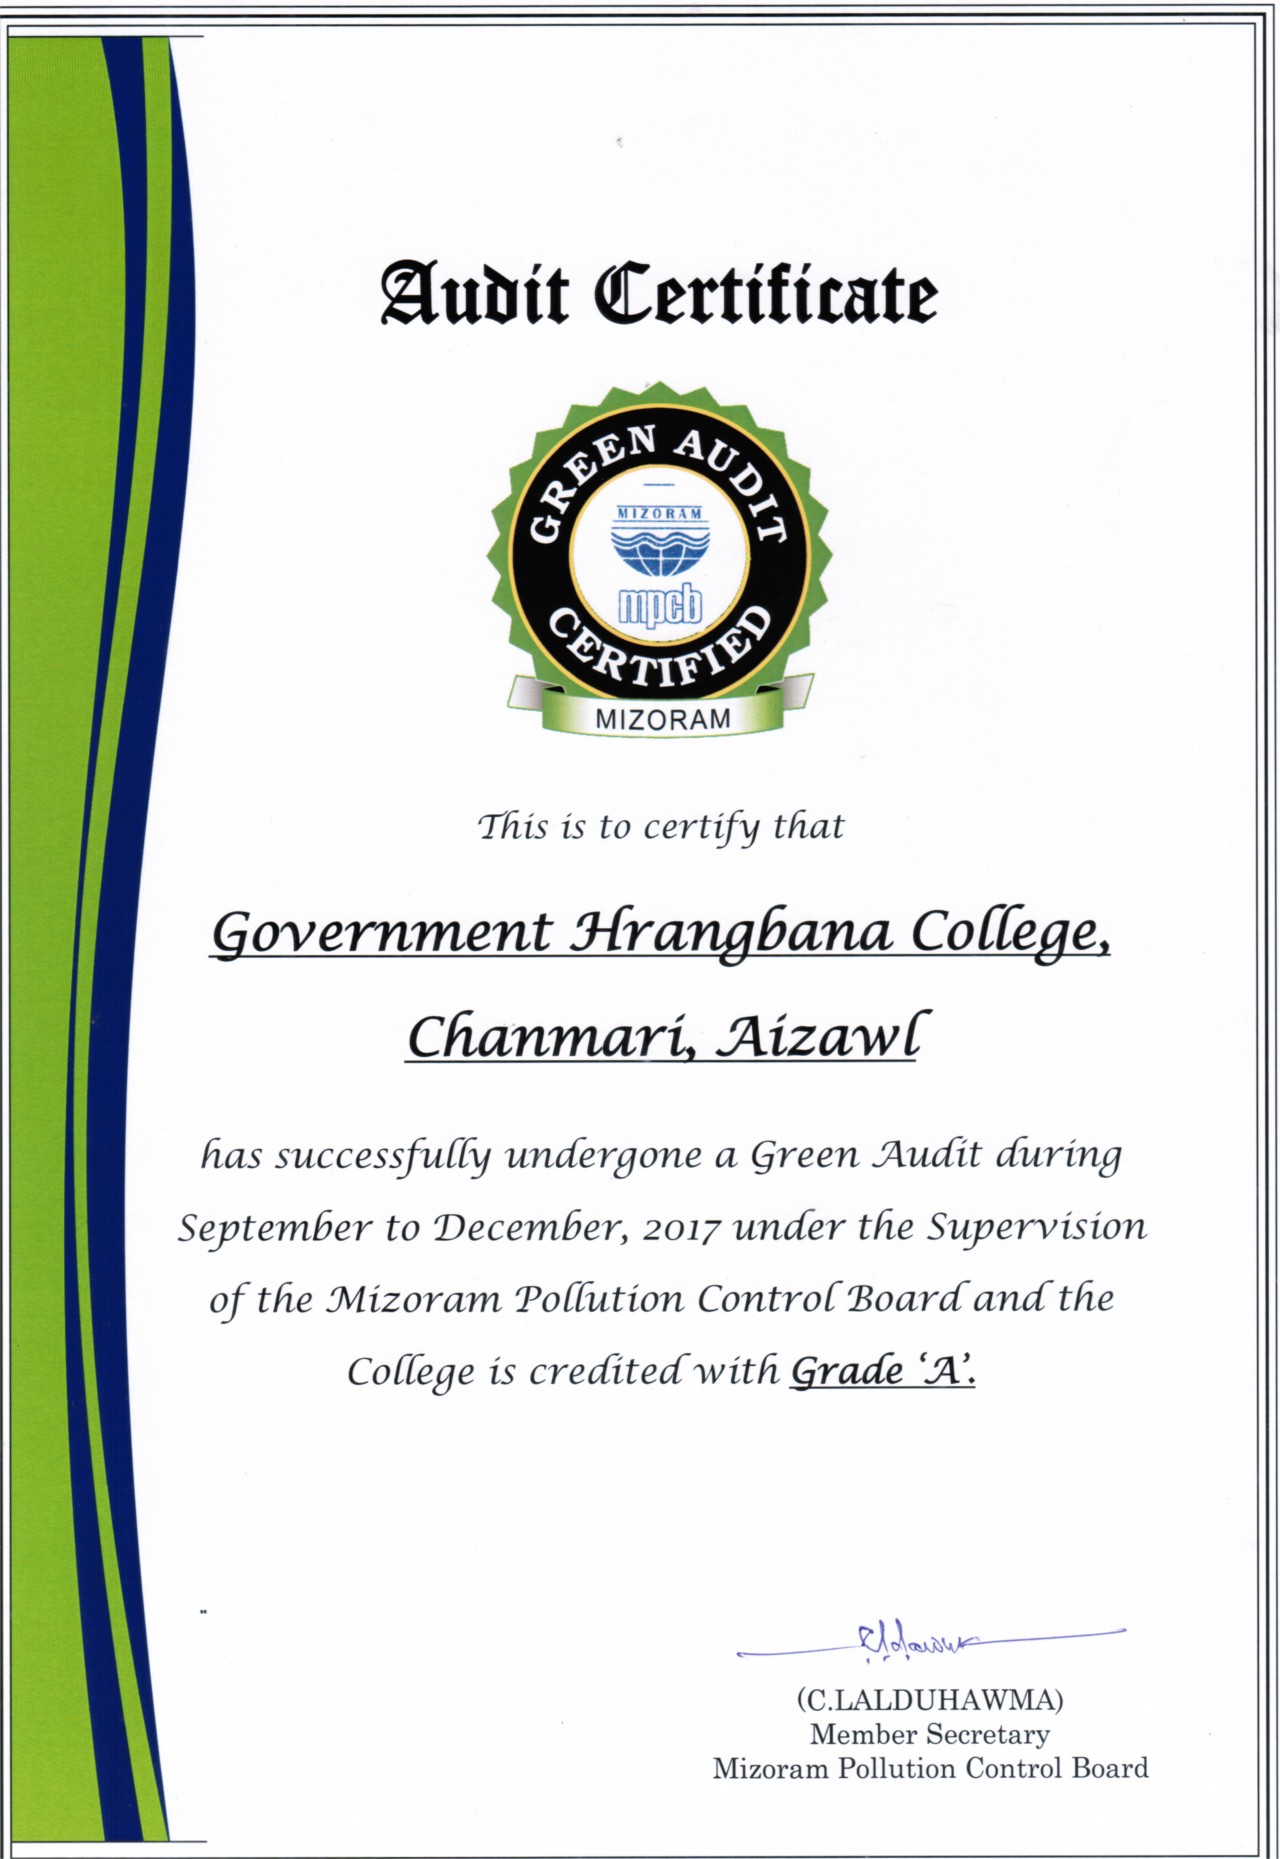 Govt Hrangbana College Government of Mizoram India